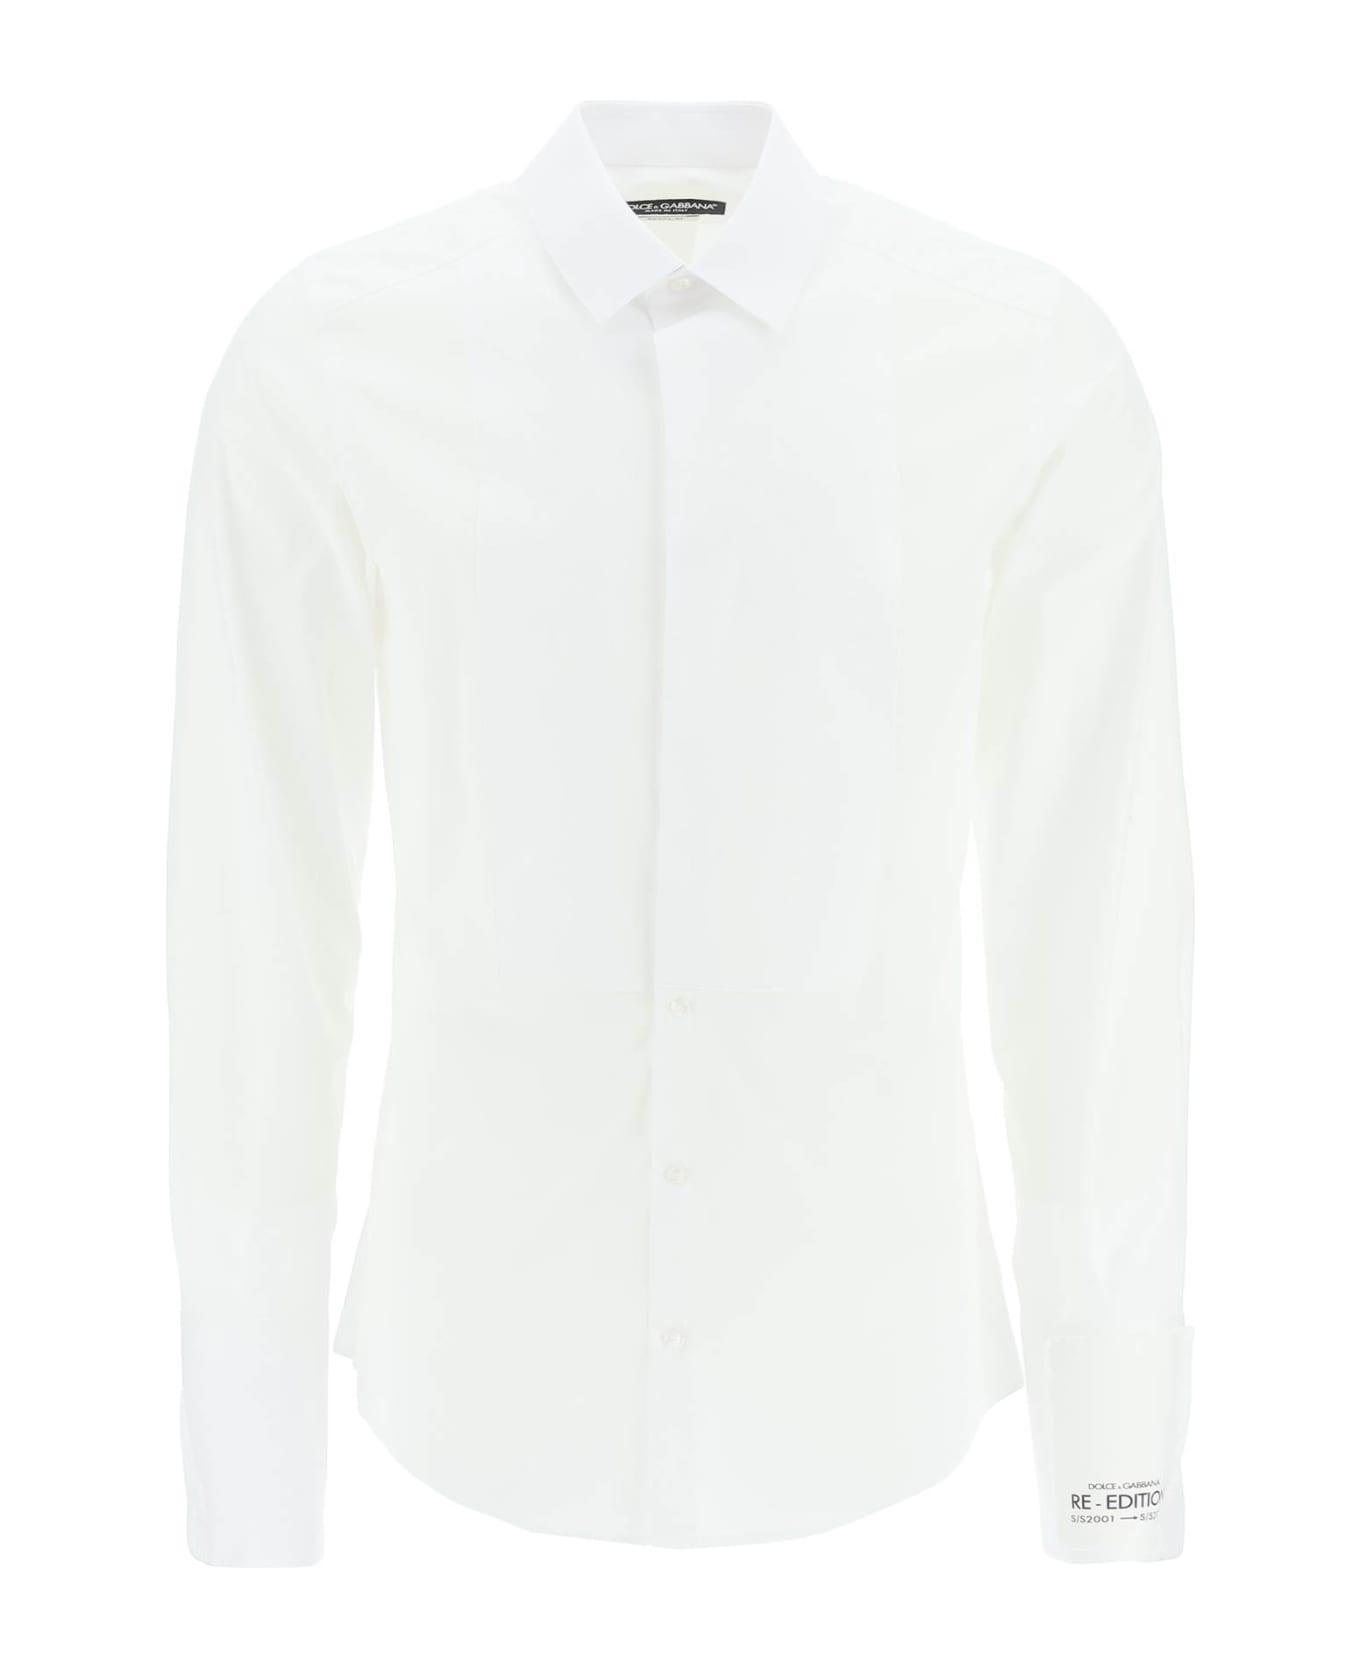 Dolce & Gabbana Re-edition Gold-fit Tuxedo Shirt - White